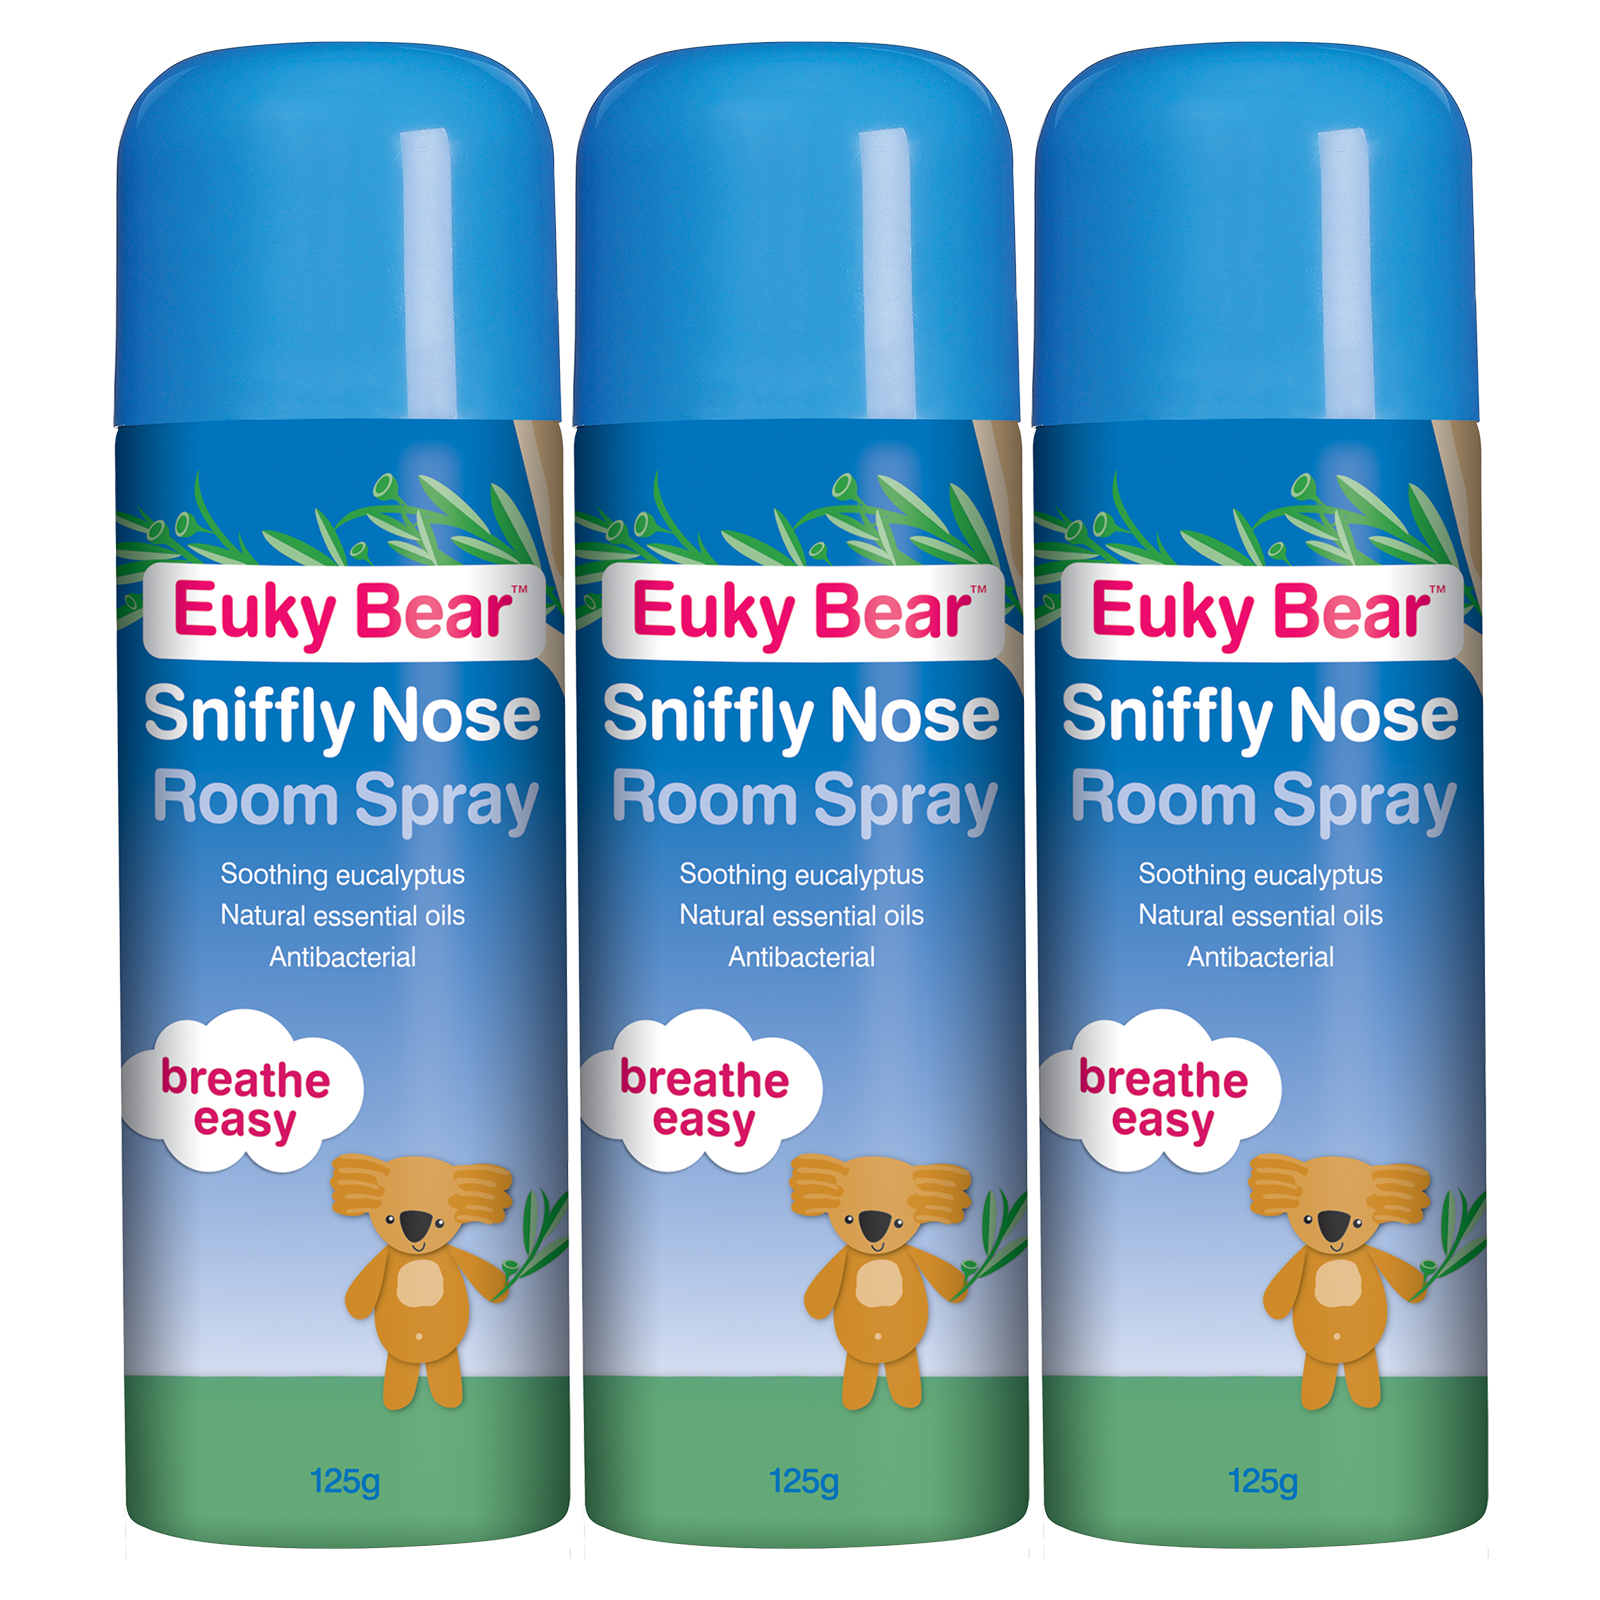 Euky Bear Sniffly Nose Room Spray 125g (Bundle of 3)